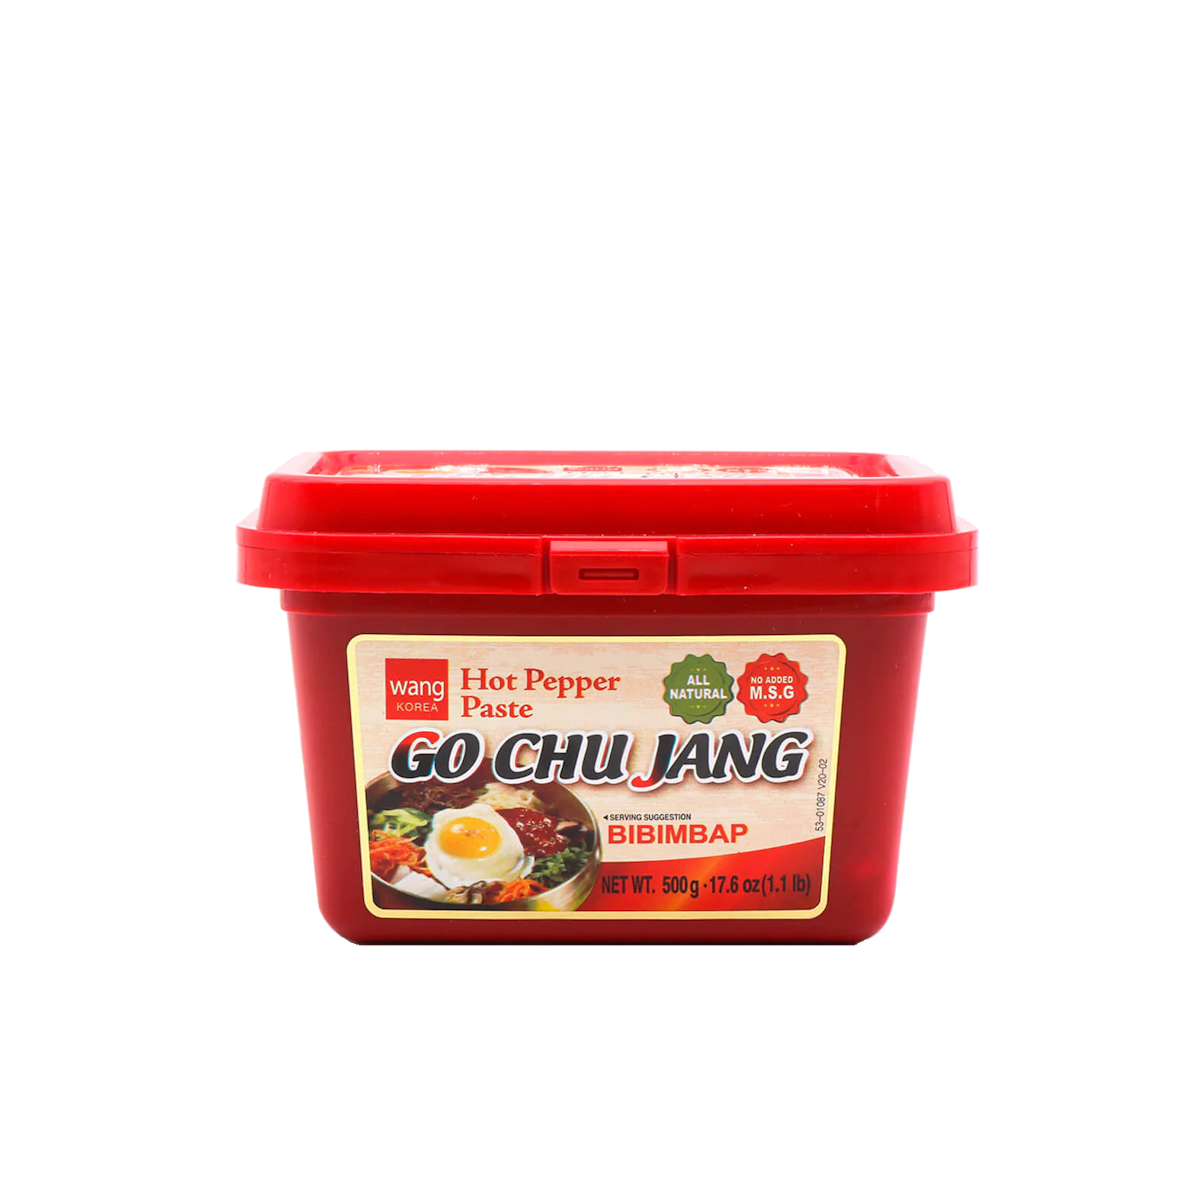 Wang Korea Bibimbap Hot Pepper Paste 500g